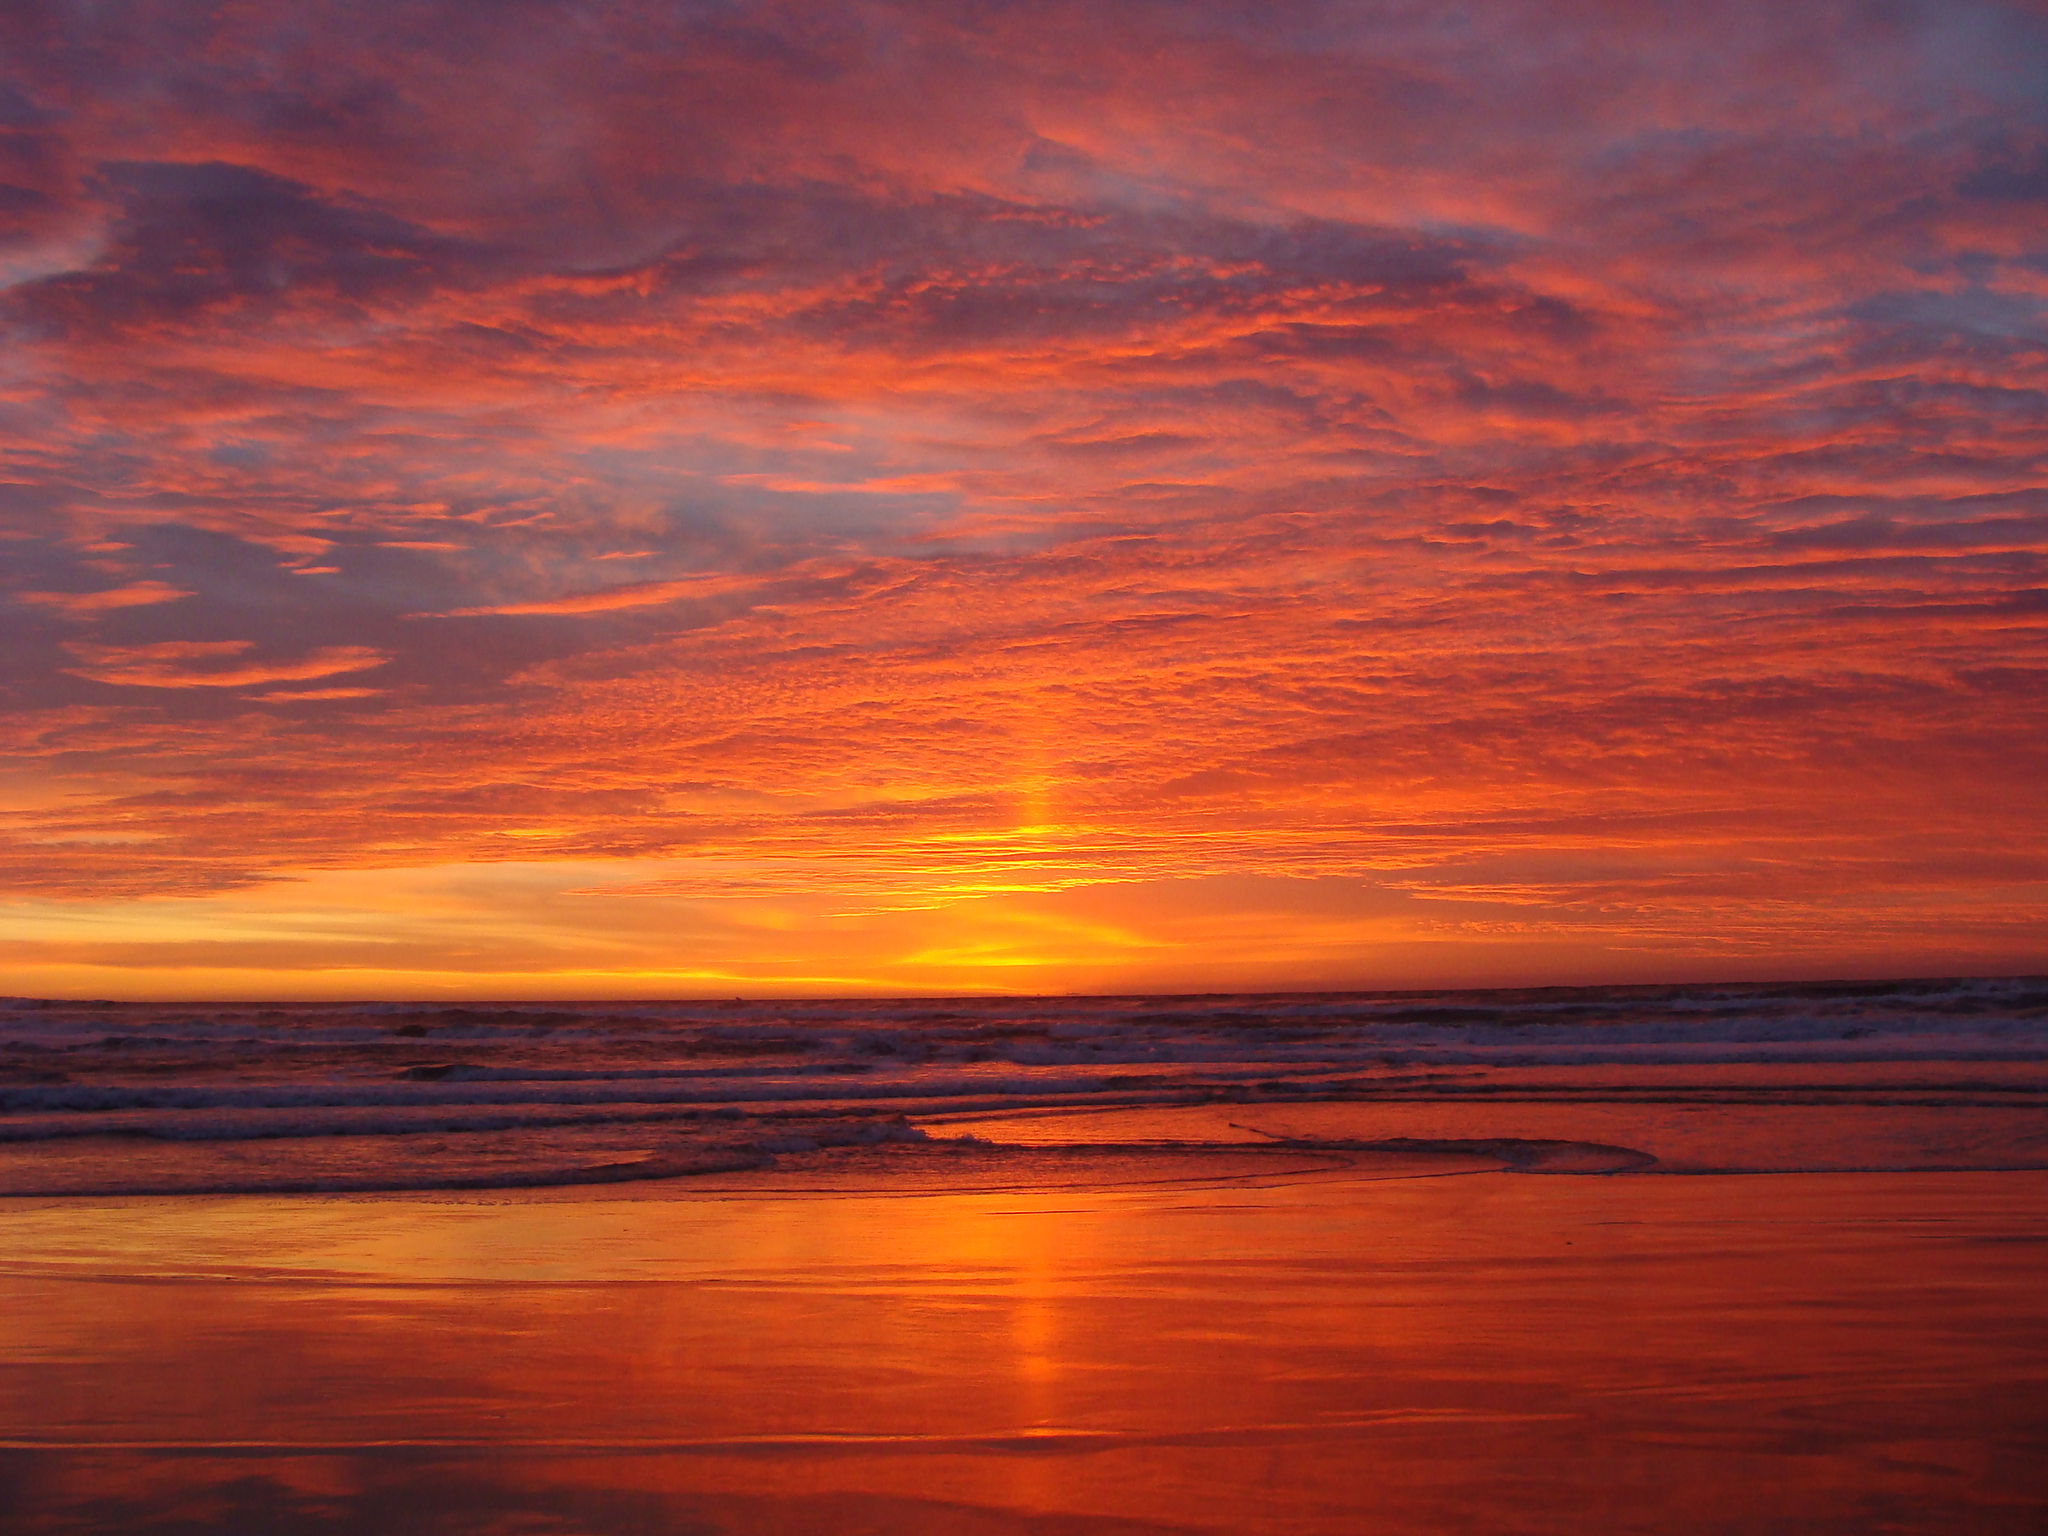 File:Sunset Marina.JPG - Wikimedia Commons